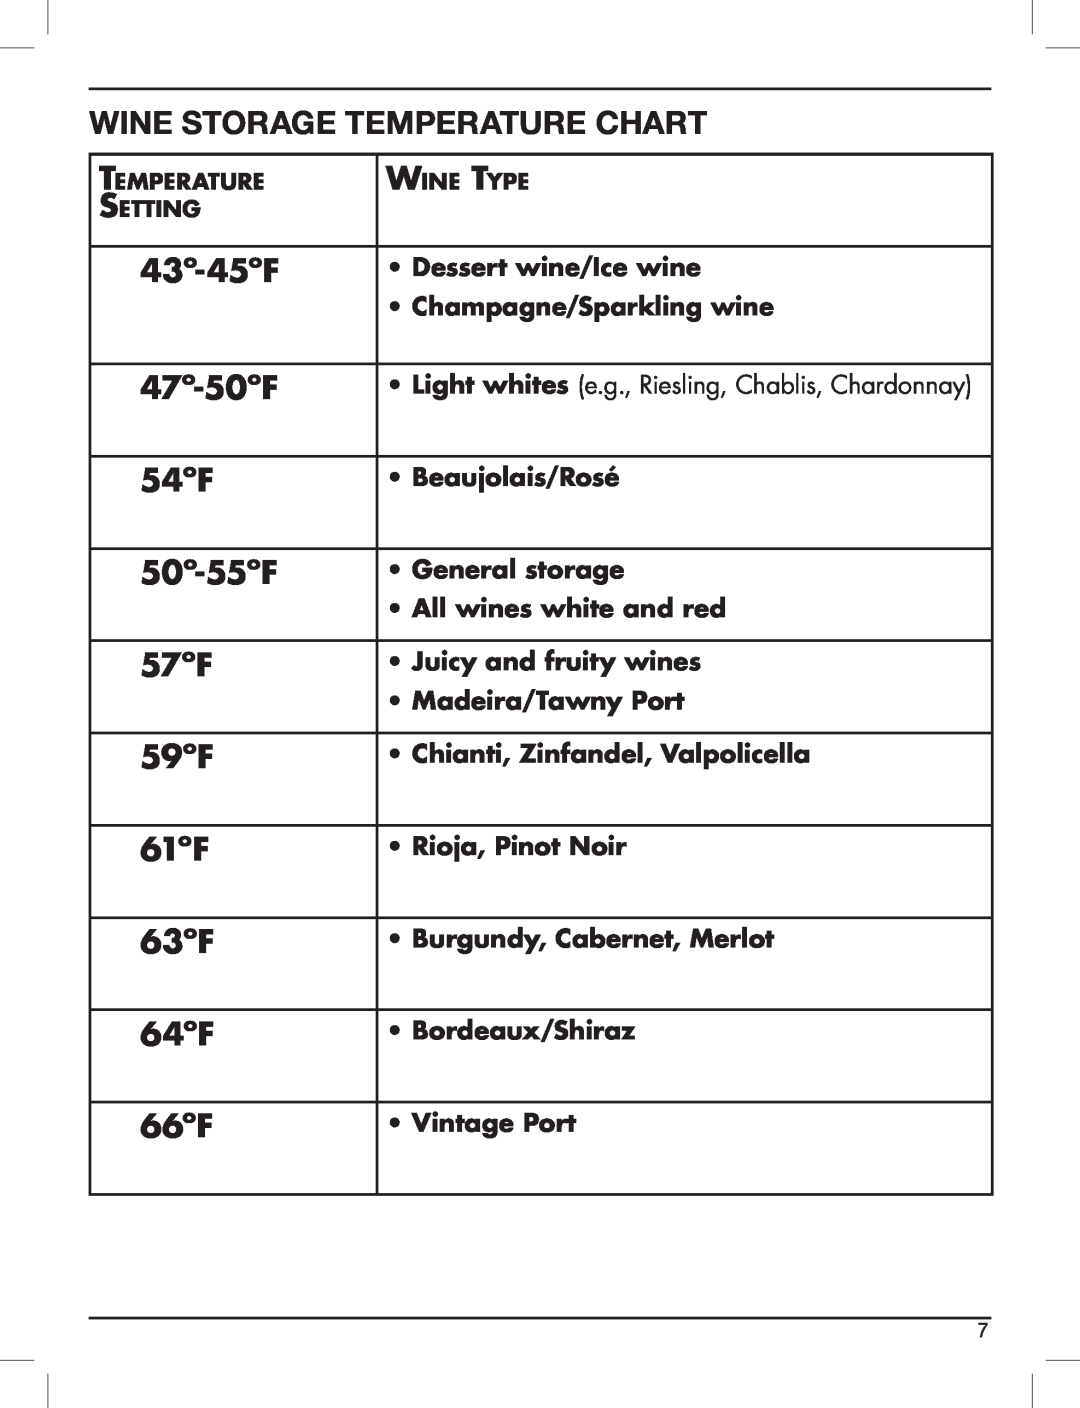 Cuisinart CWC-3200 Wine Storage Temperature Chart, 43º-45ºF, 47º-50ºF, 54ºF, 50º-55ºF, 57ºF, 59ºF, 61ºF, 63ºF, 64ºF, 66ºF 